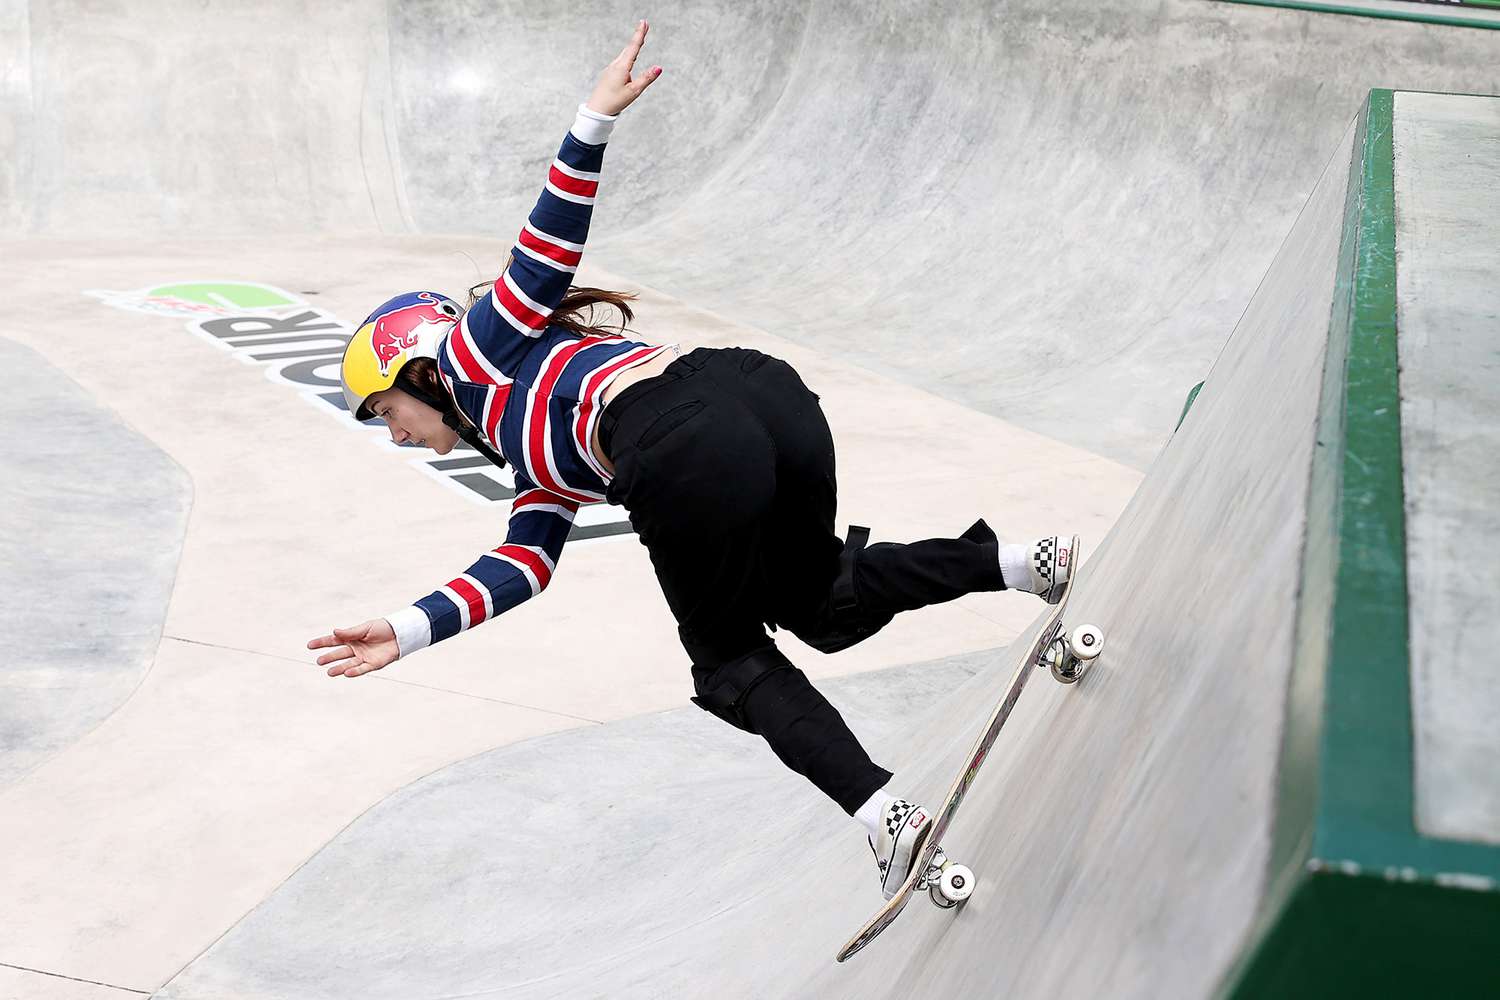 How Brighton Zeuner Is Preparing for Olympic Skateboarding in Tokyo